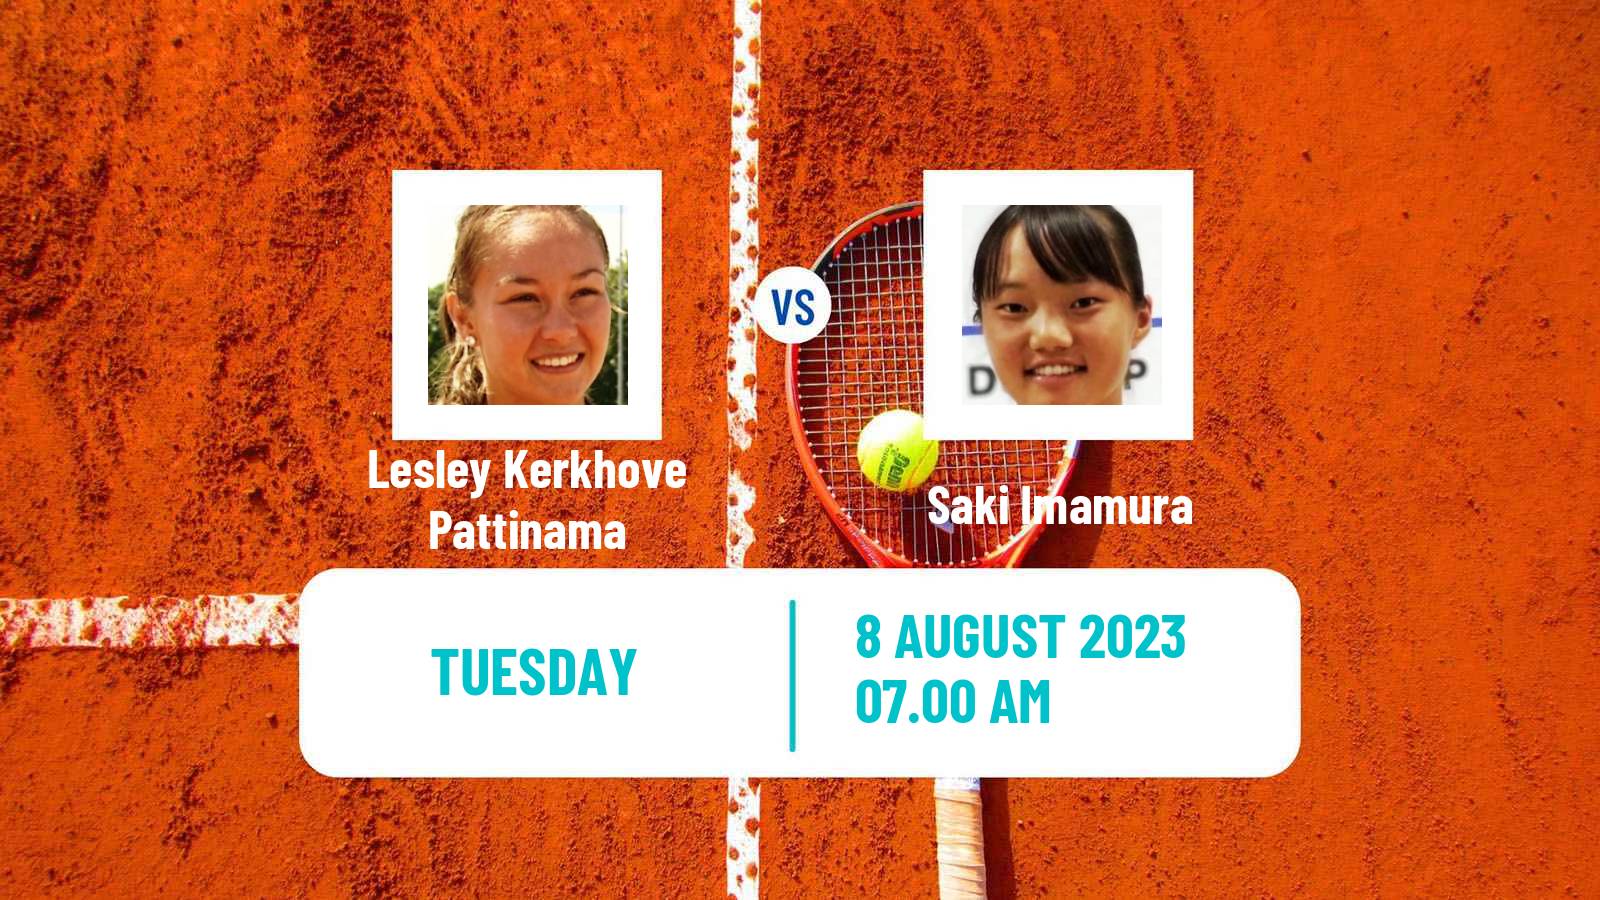 Tennis ITF W25 Roehampton 3 Women Lesley Kerkhove Pattinama - Saki Imamura